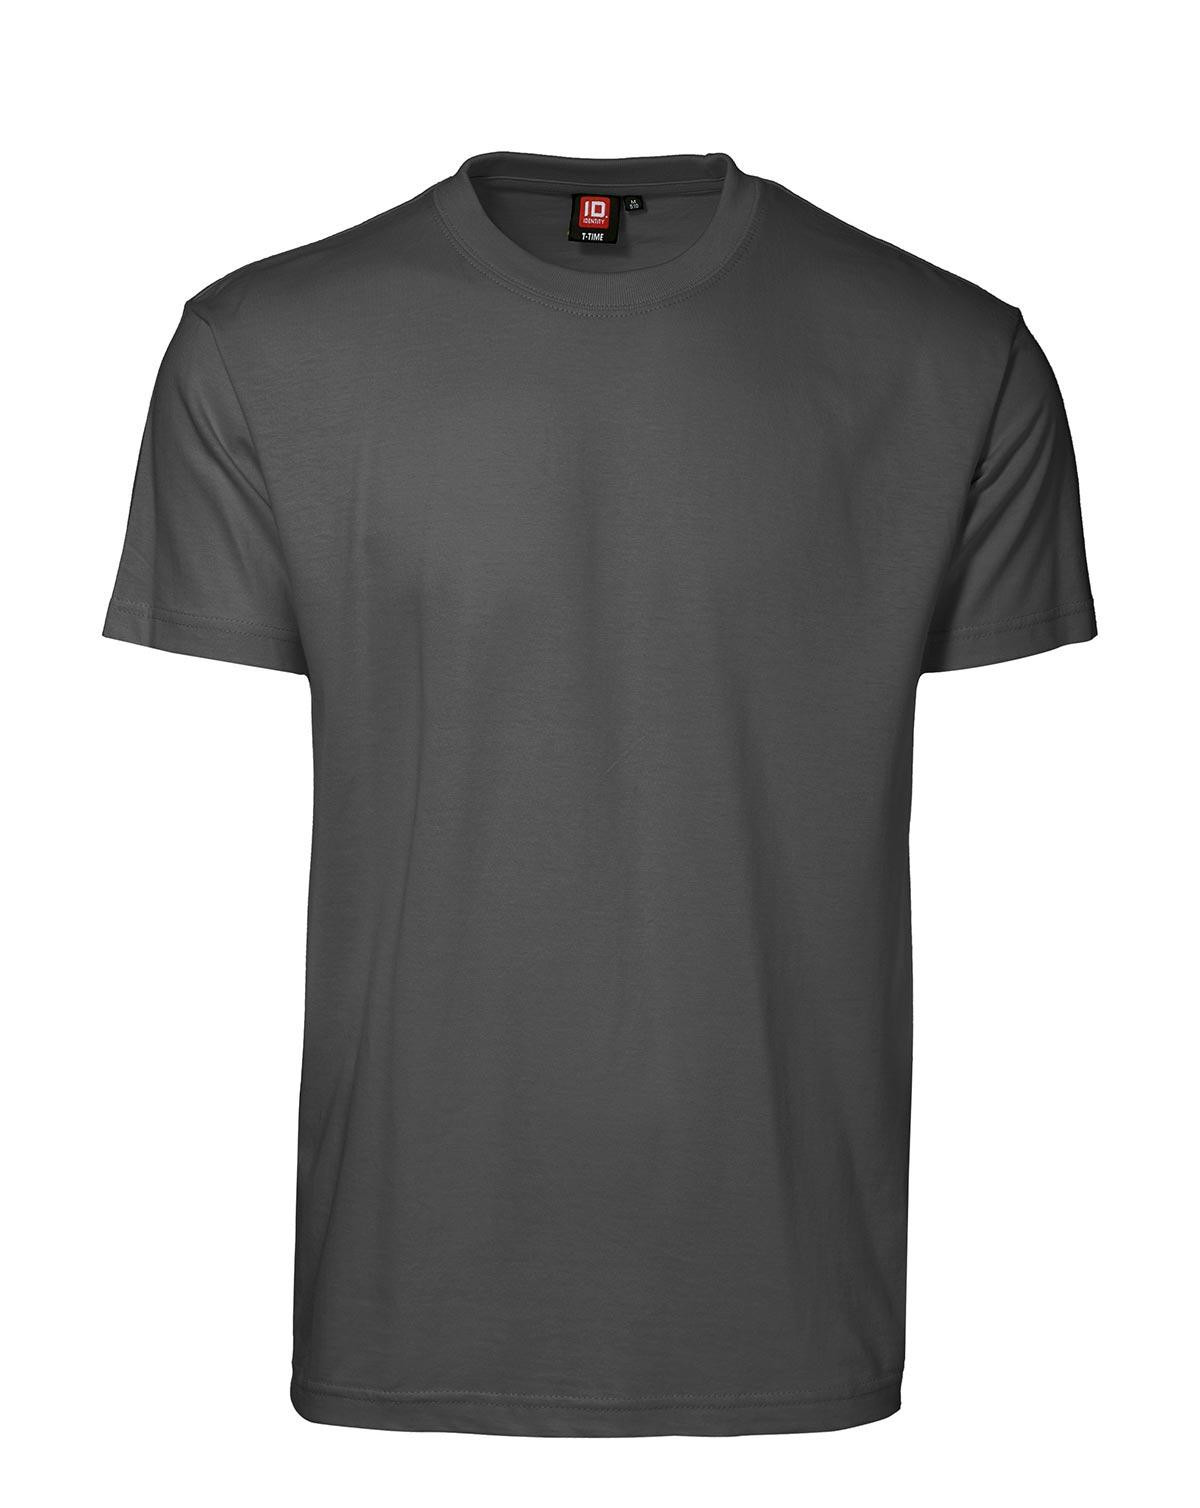 ID T-Time T-shirt, rund hals (Charcoal, S)